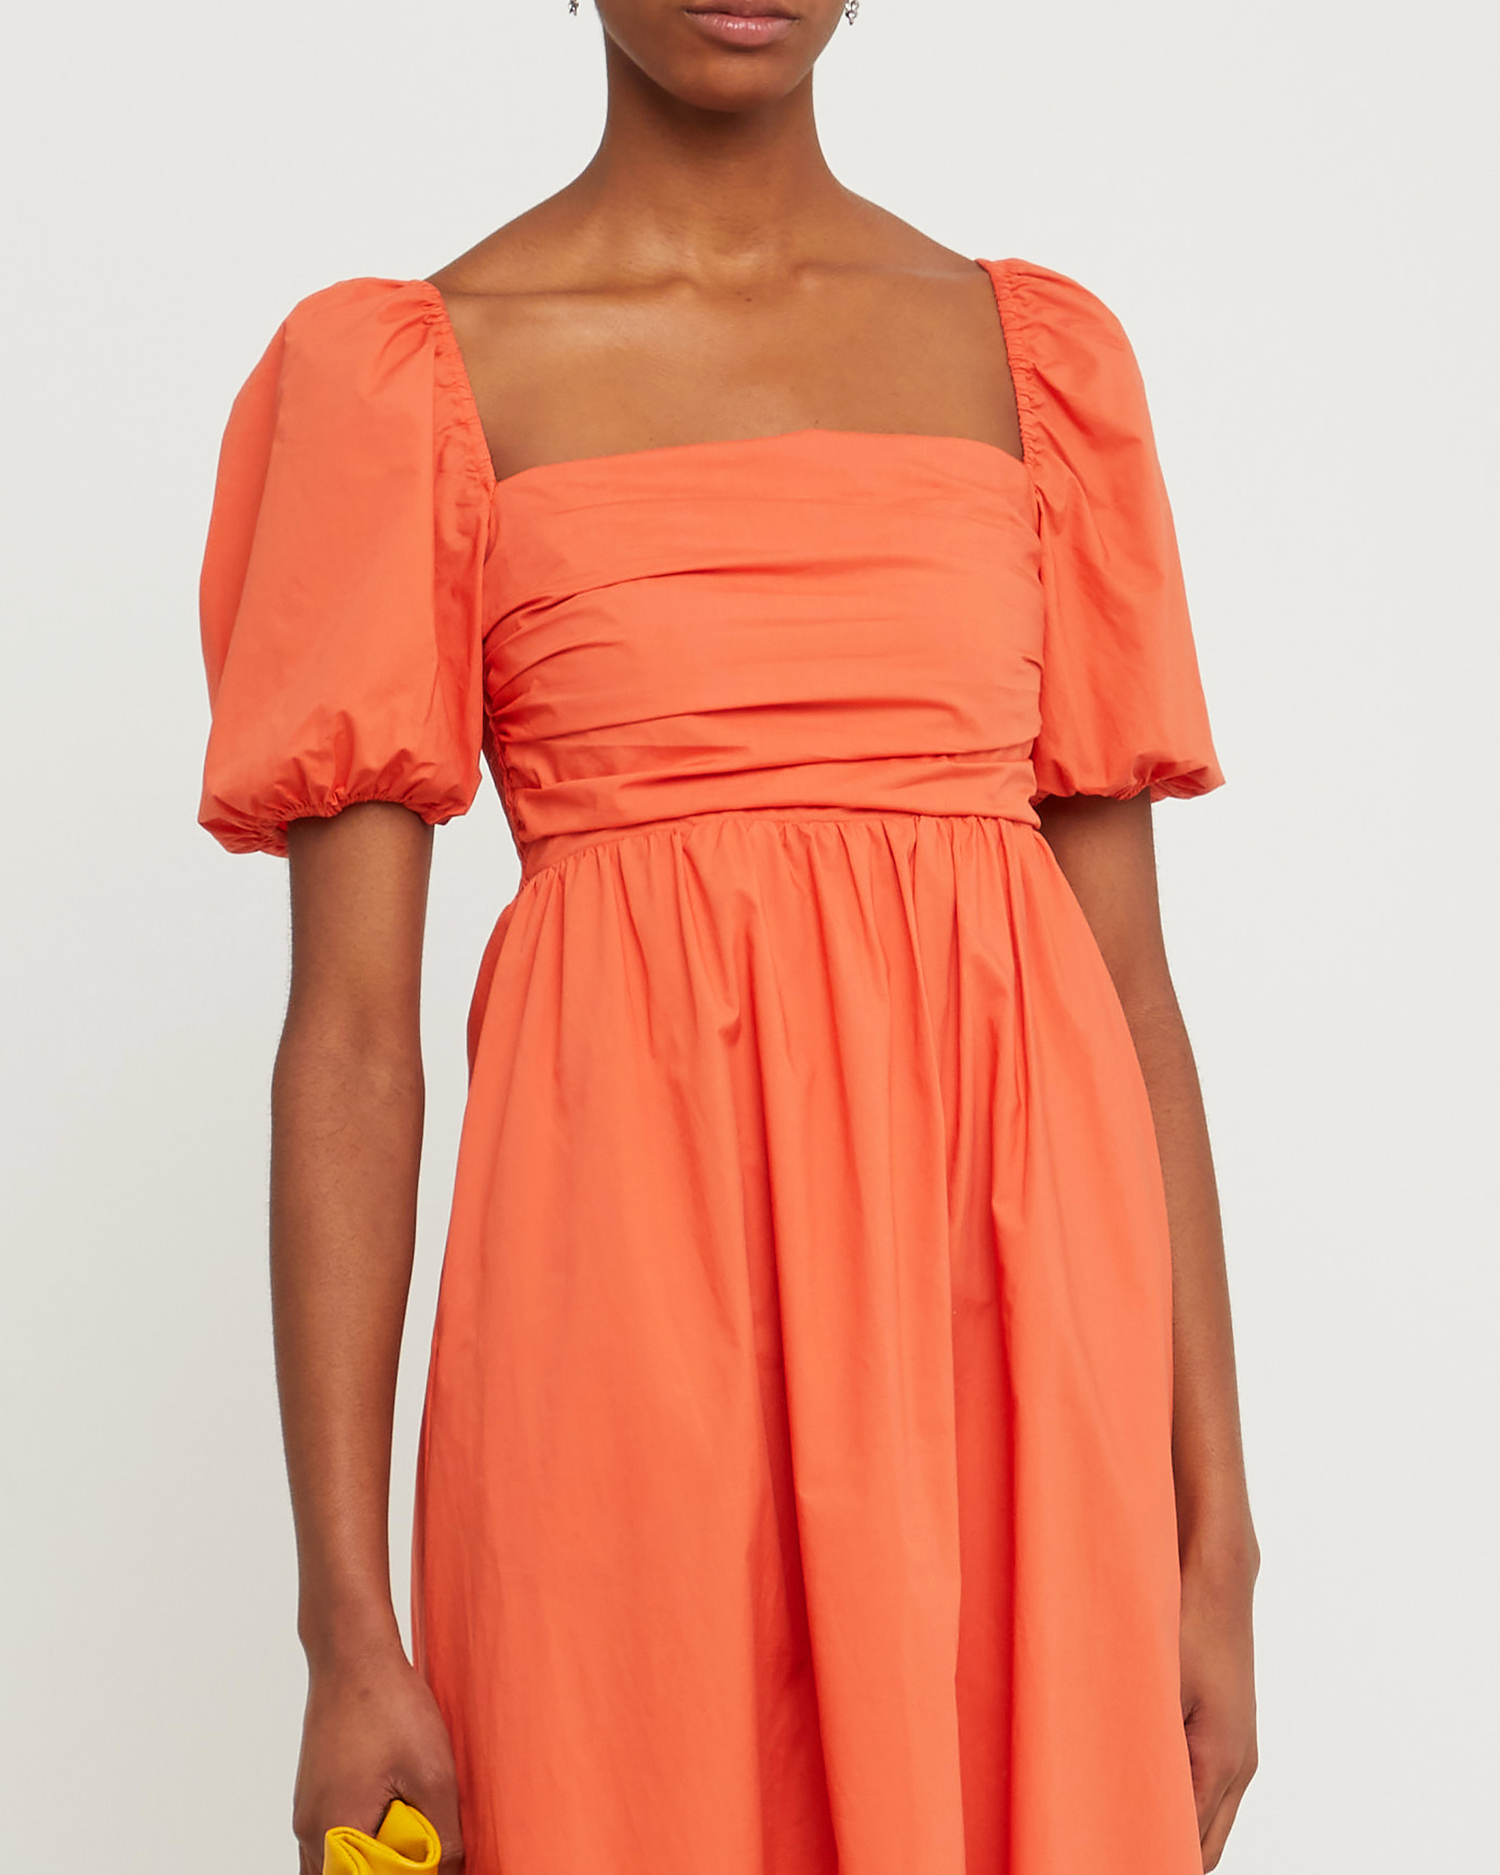 Fifth image of River Dress, a orange midi dress, square neckline, short puff sleeves, gathered bodice